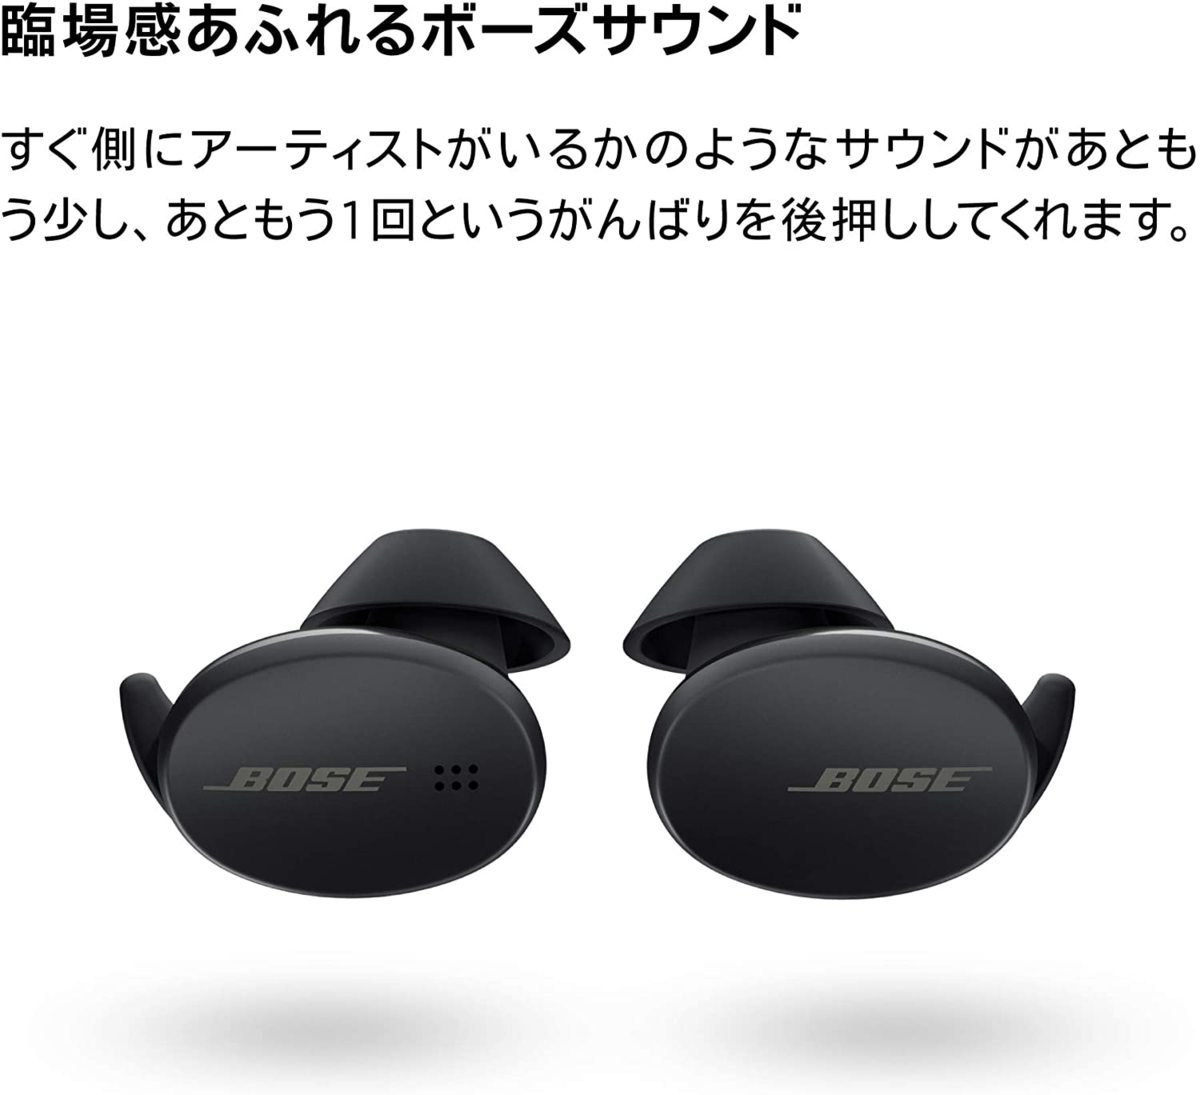 Bose Sport Earbuds オークション比較 - 価格.com